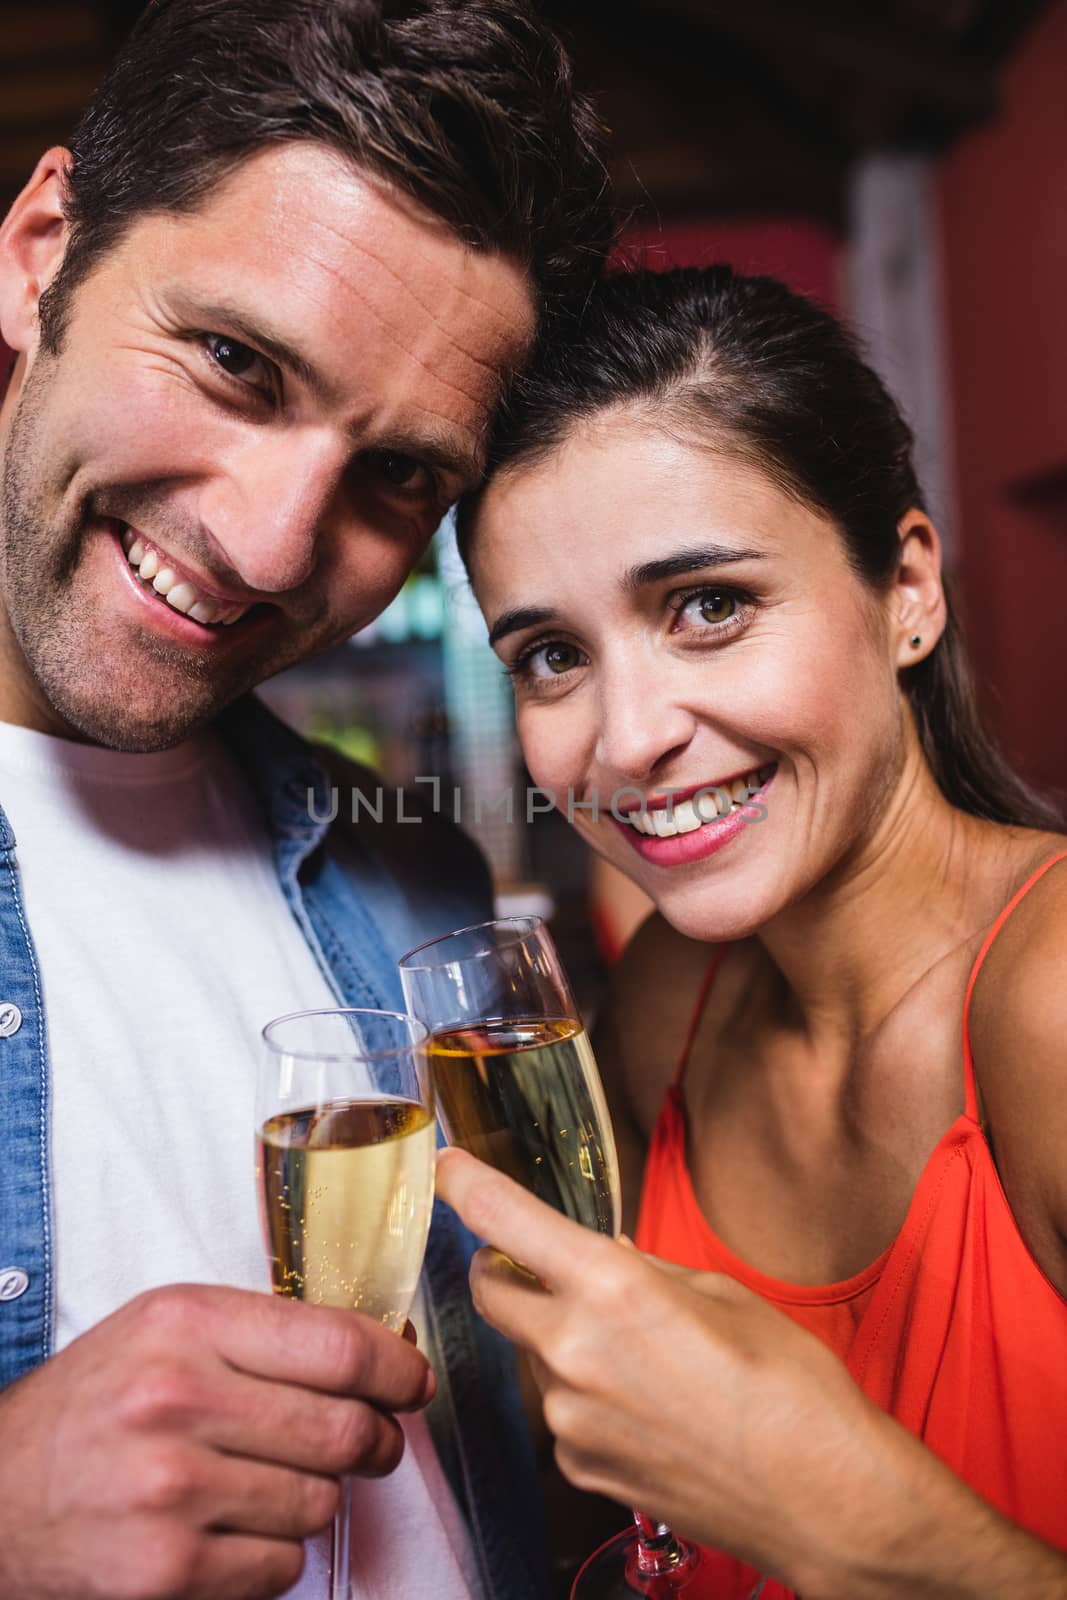 Couple enjoying champagne in nightclub by Wavebreakmedia